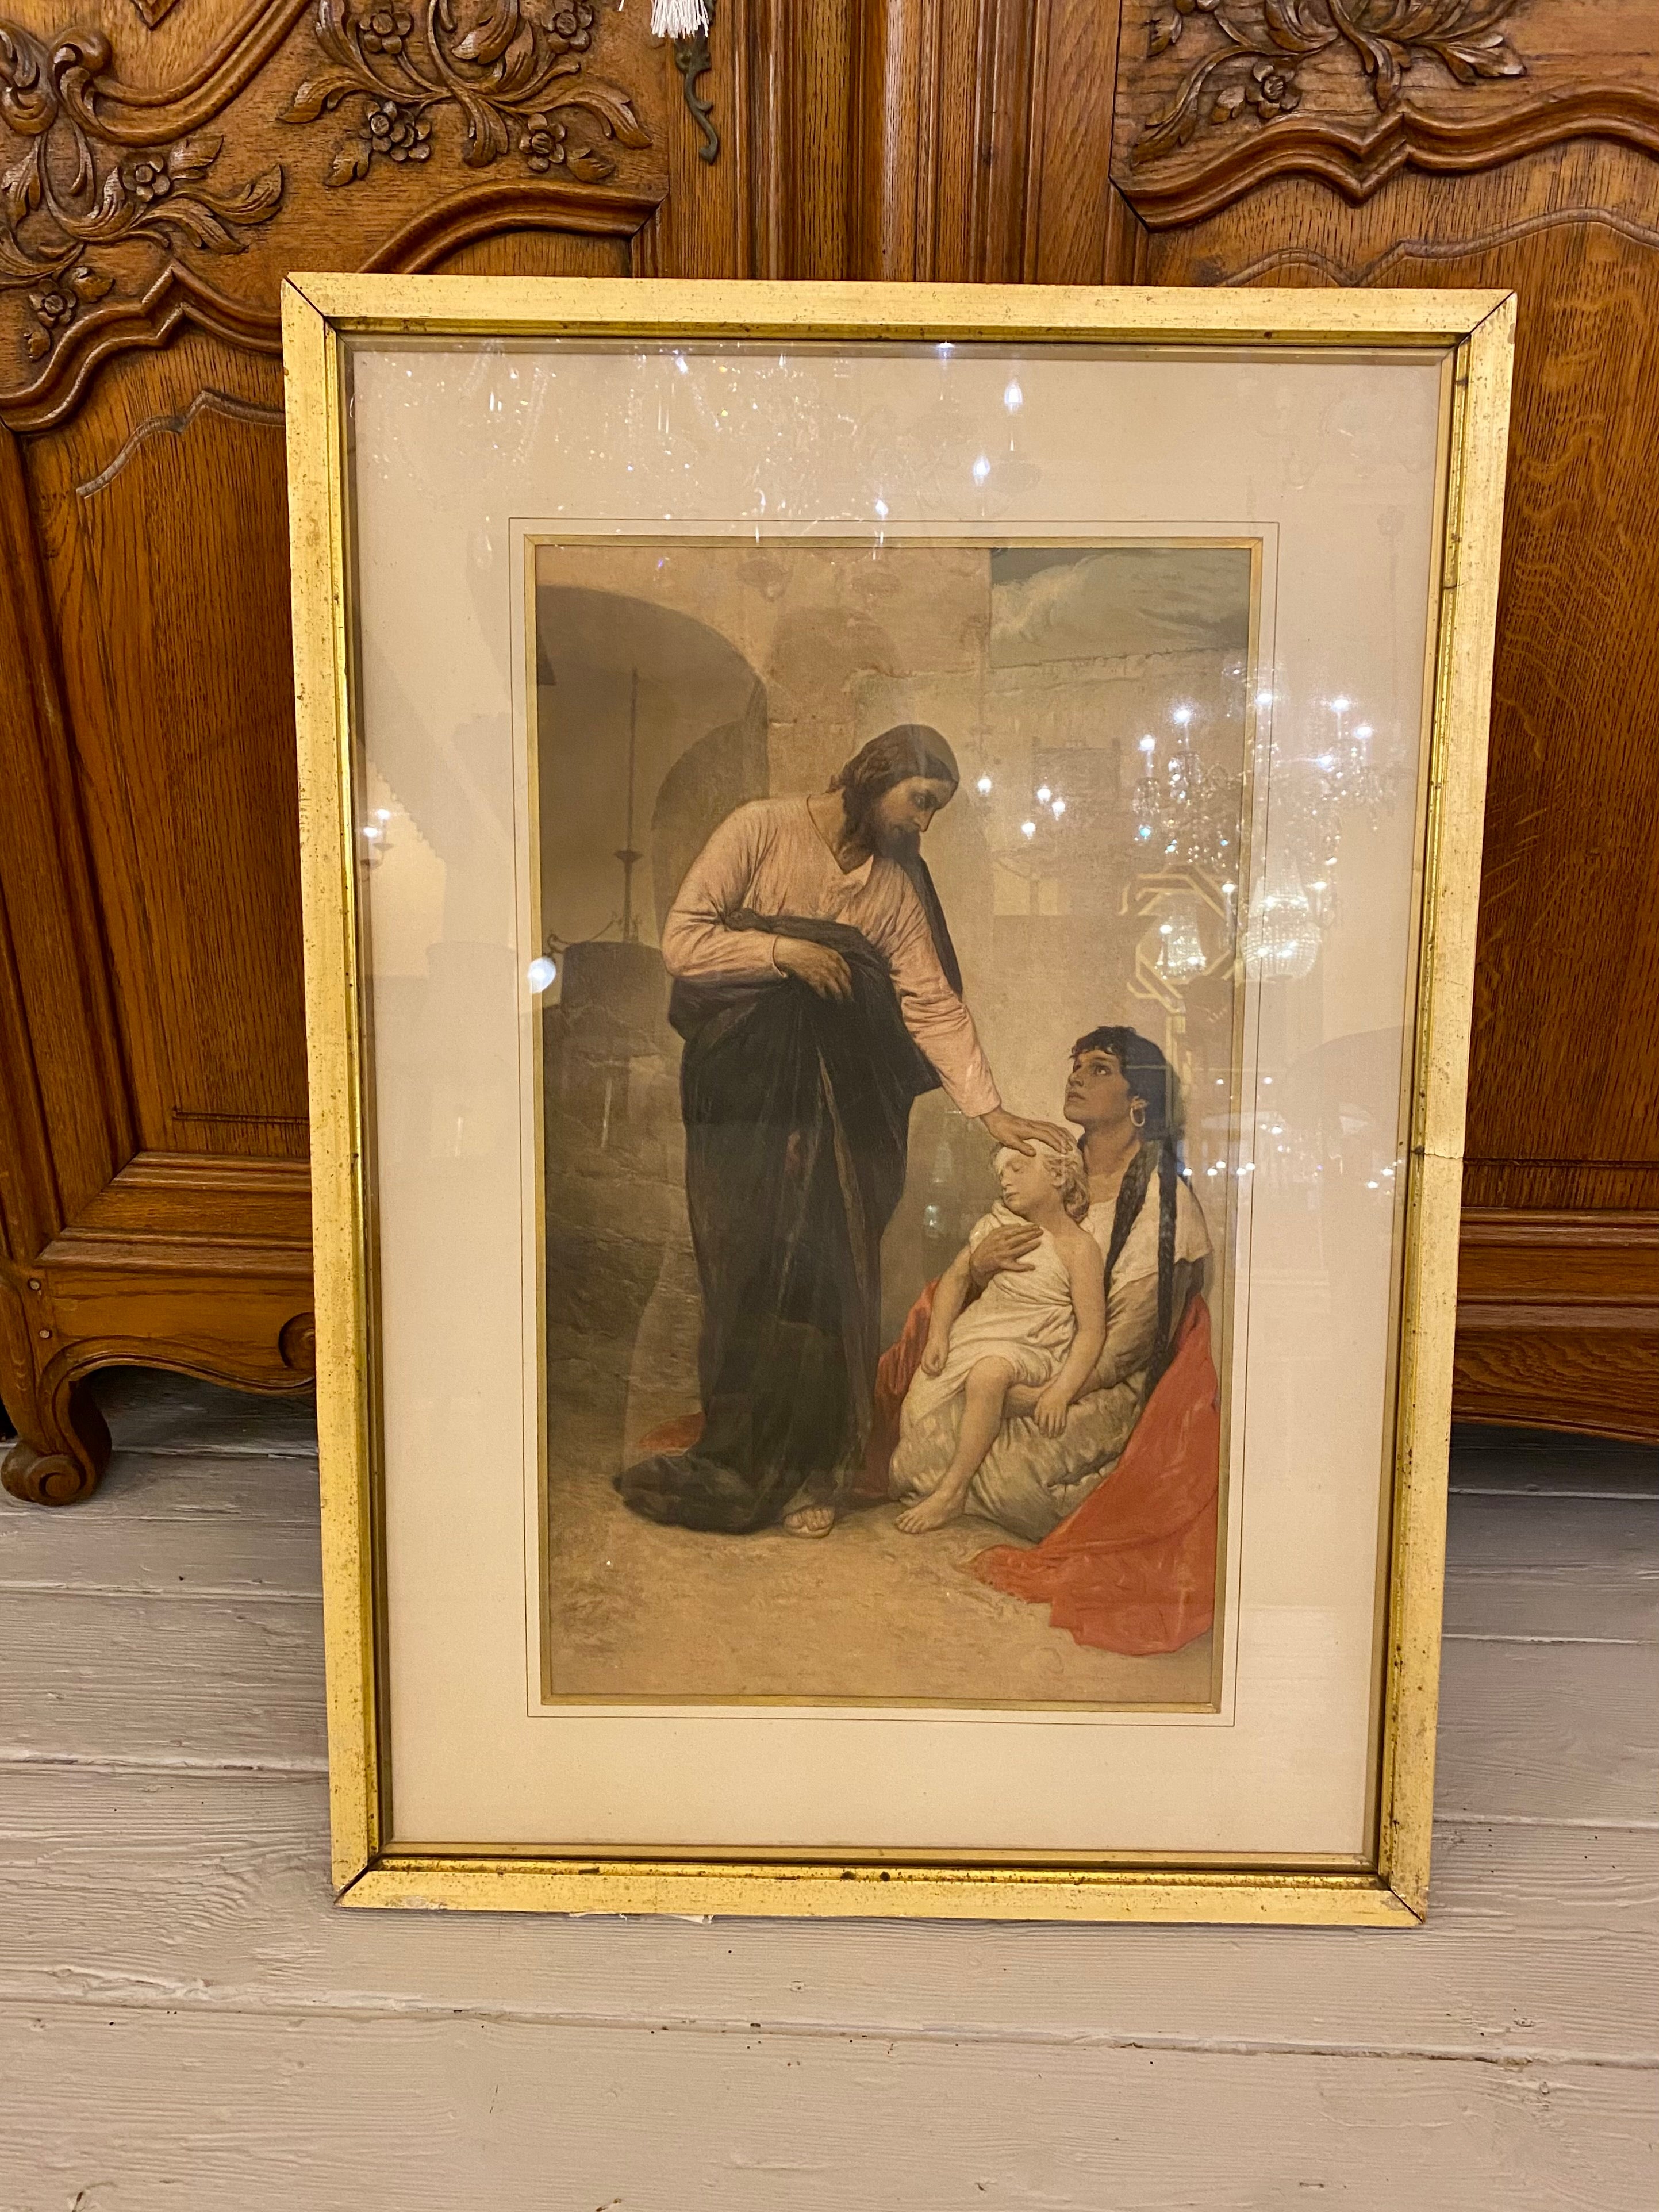 Beautiful Vintage Print of Jesus Healing a Sick Child